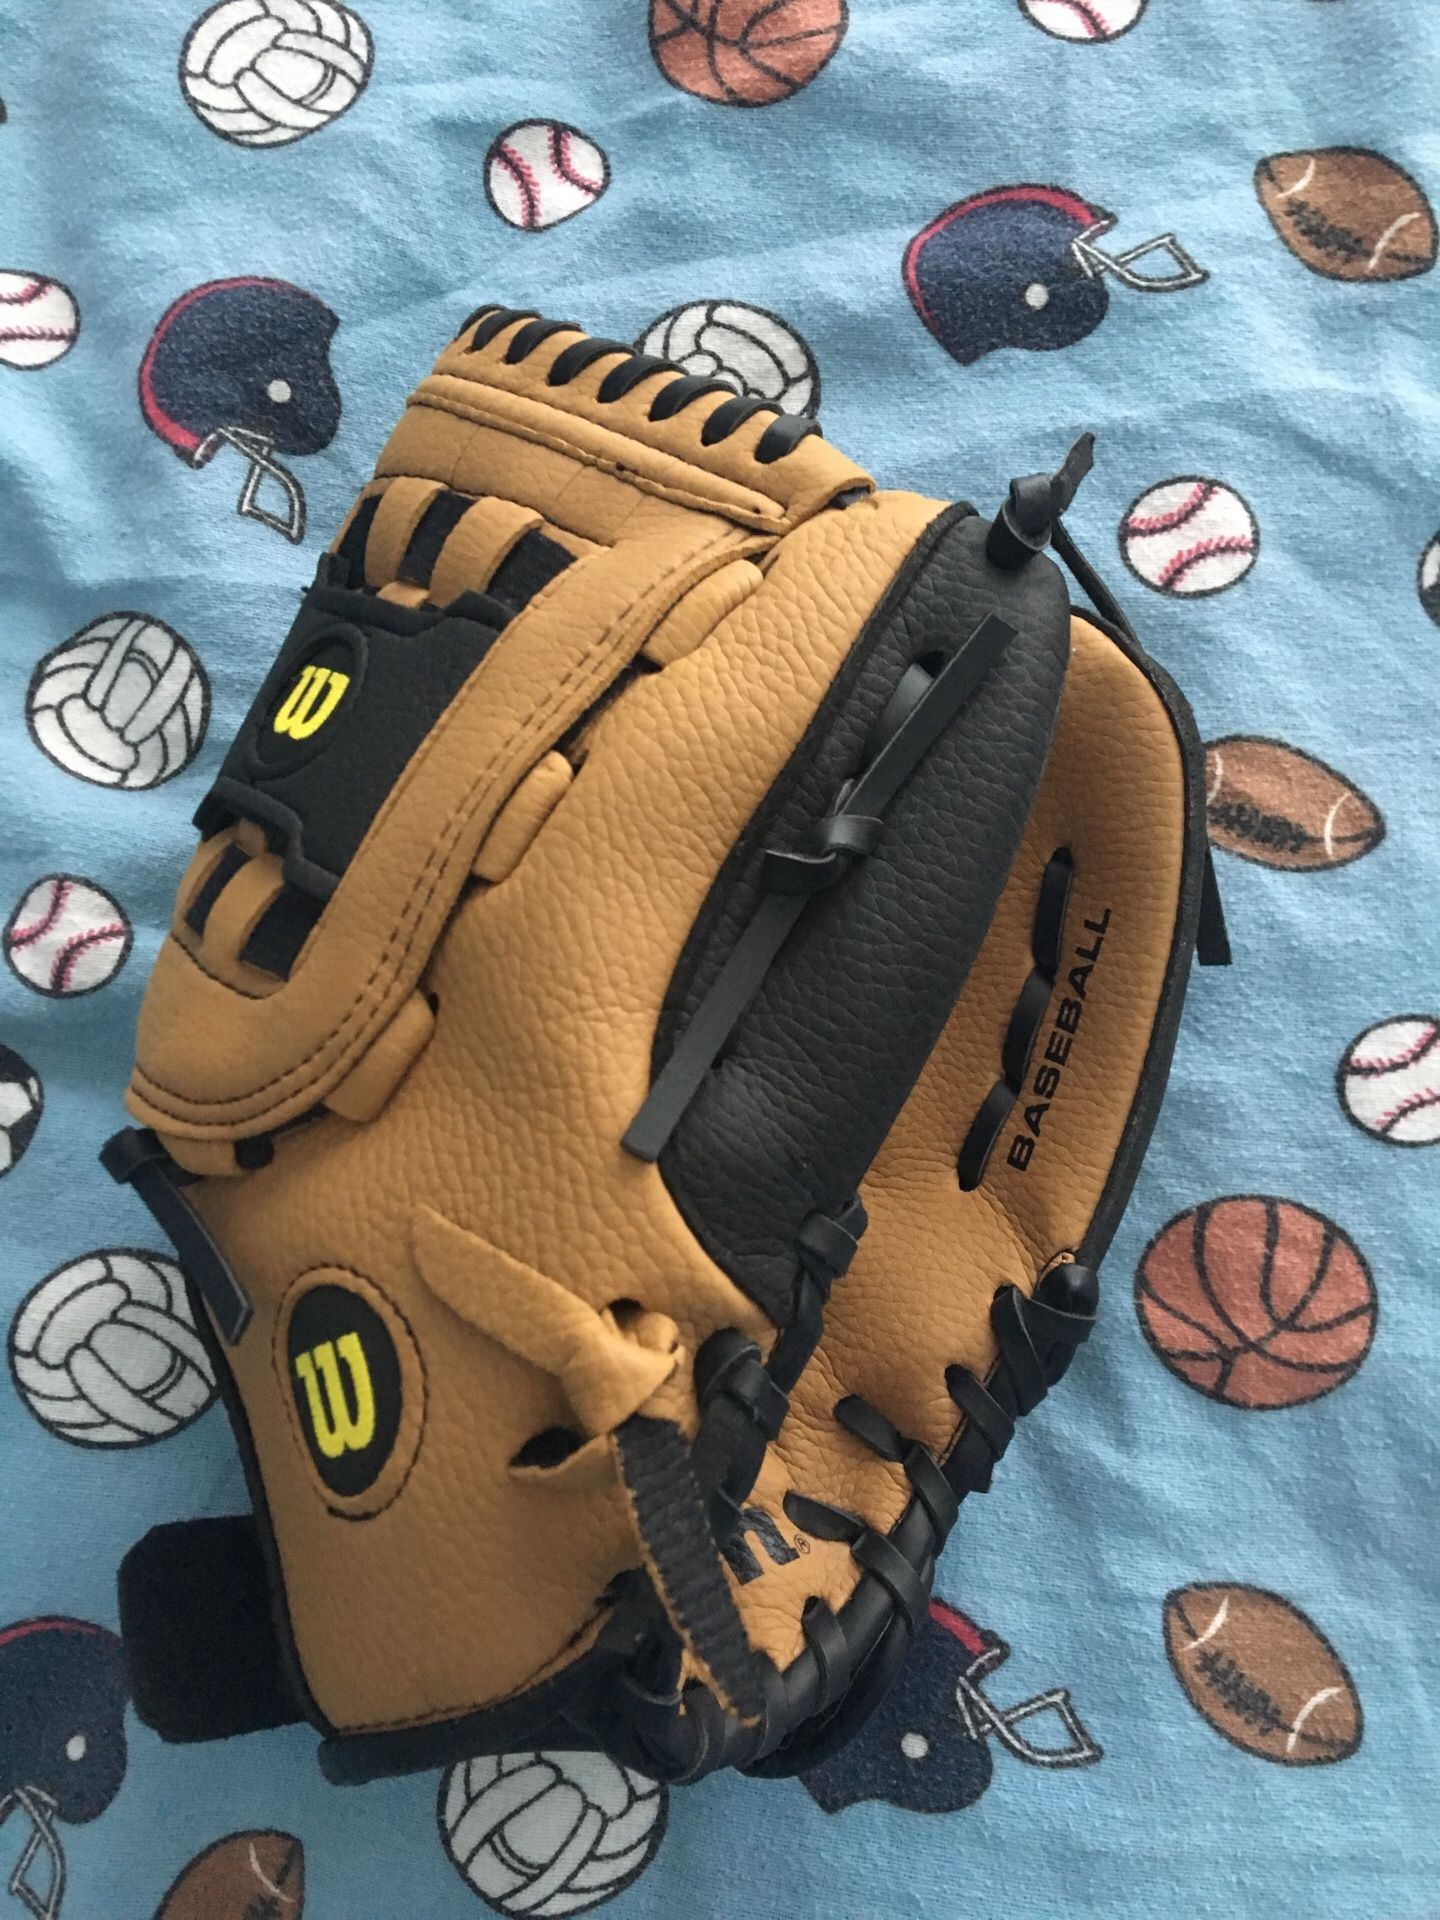 Wilson adjustable baseball glove BRAND NEW